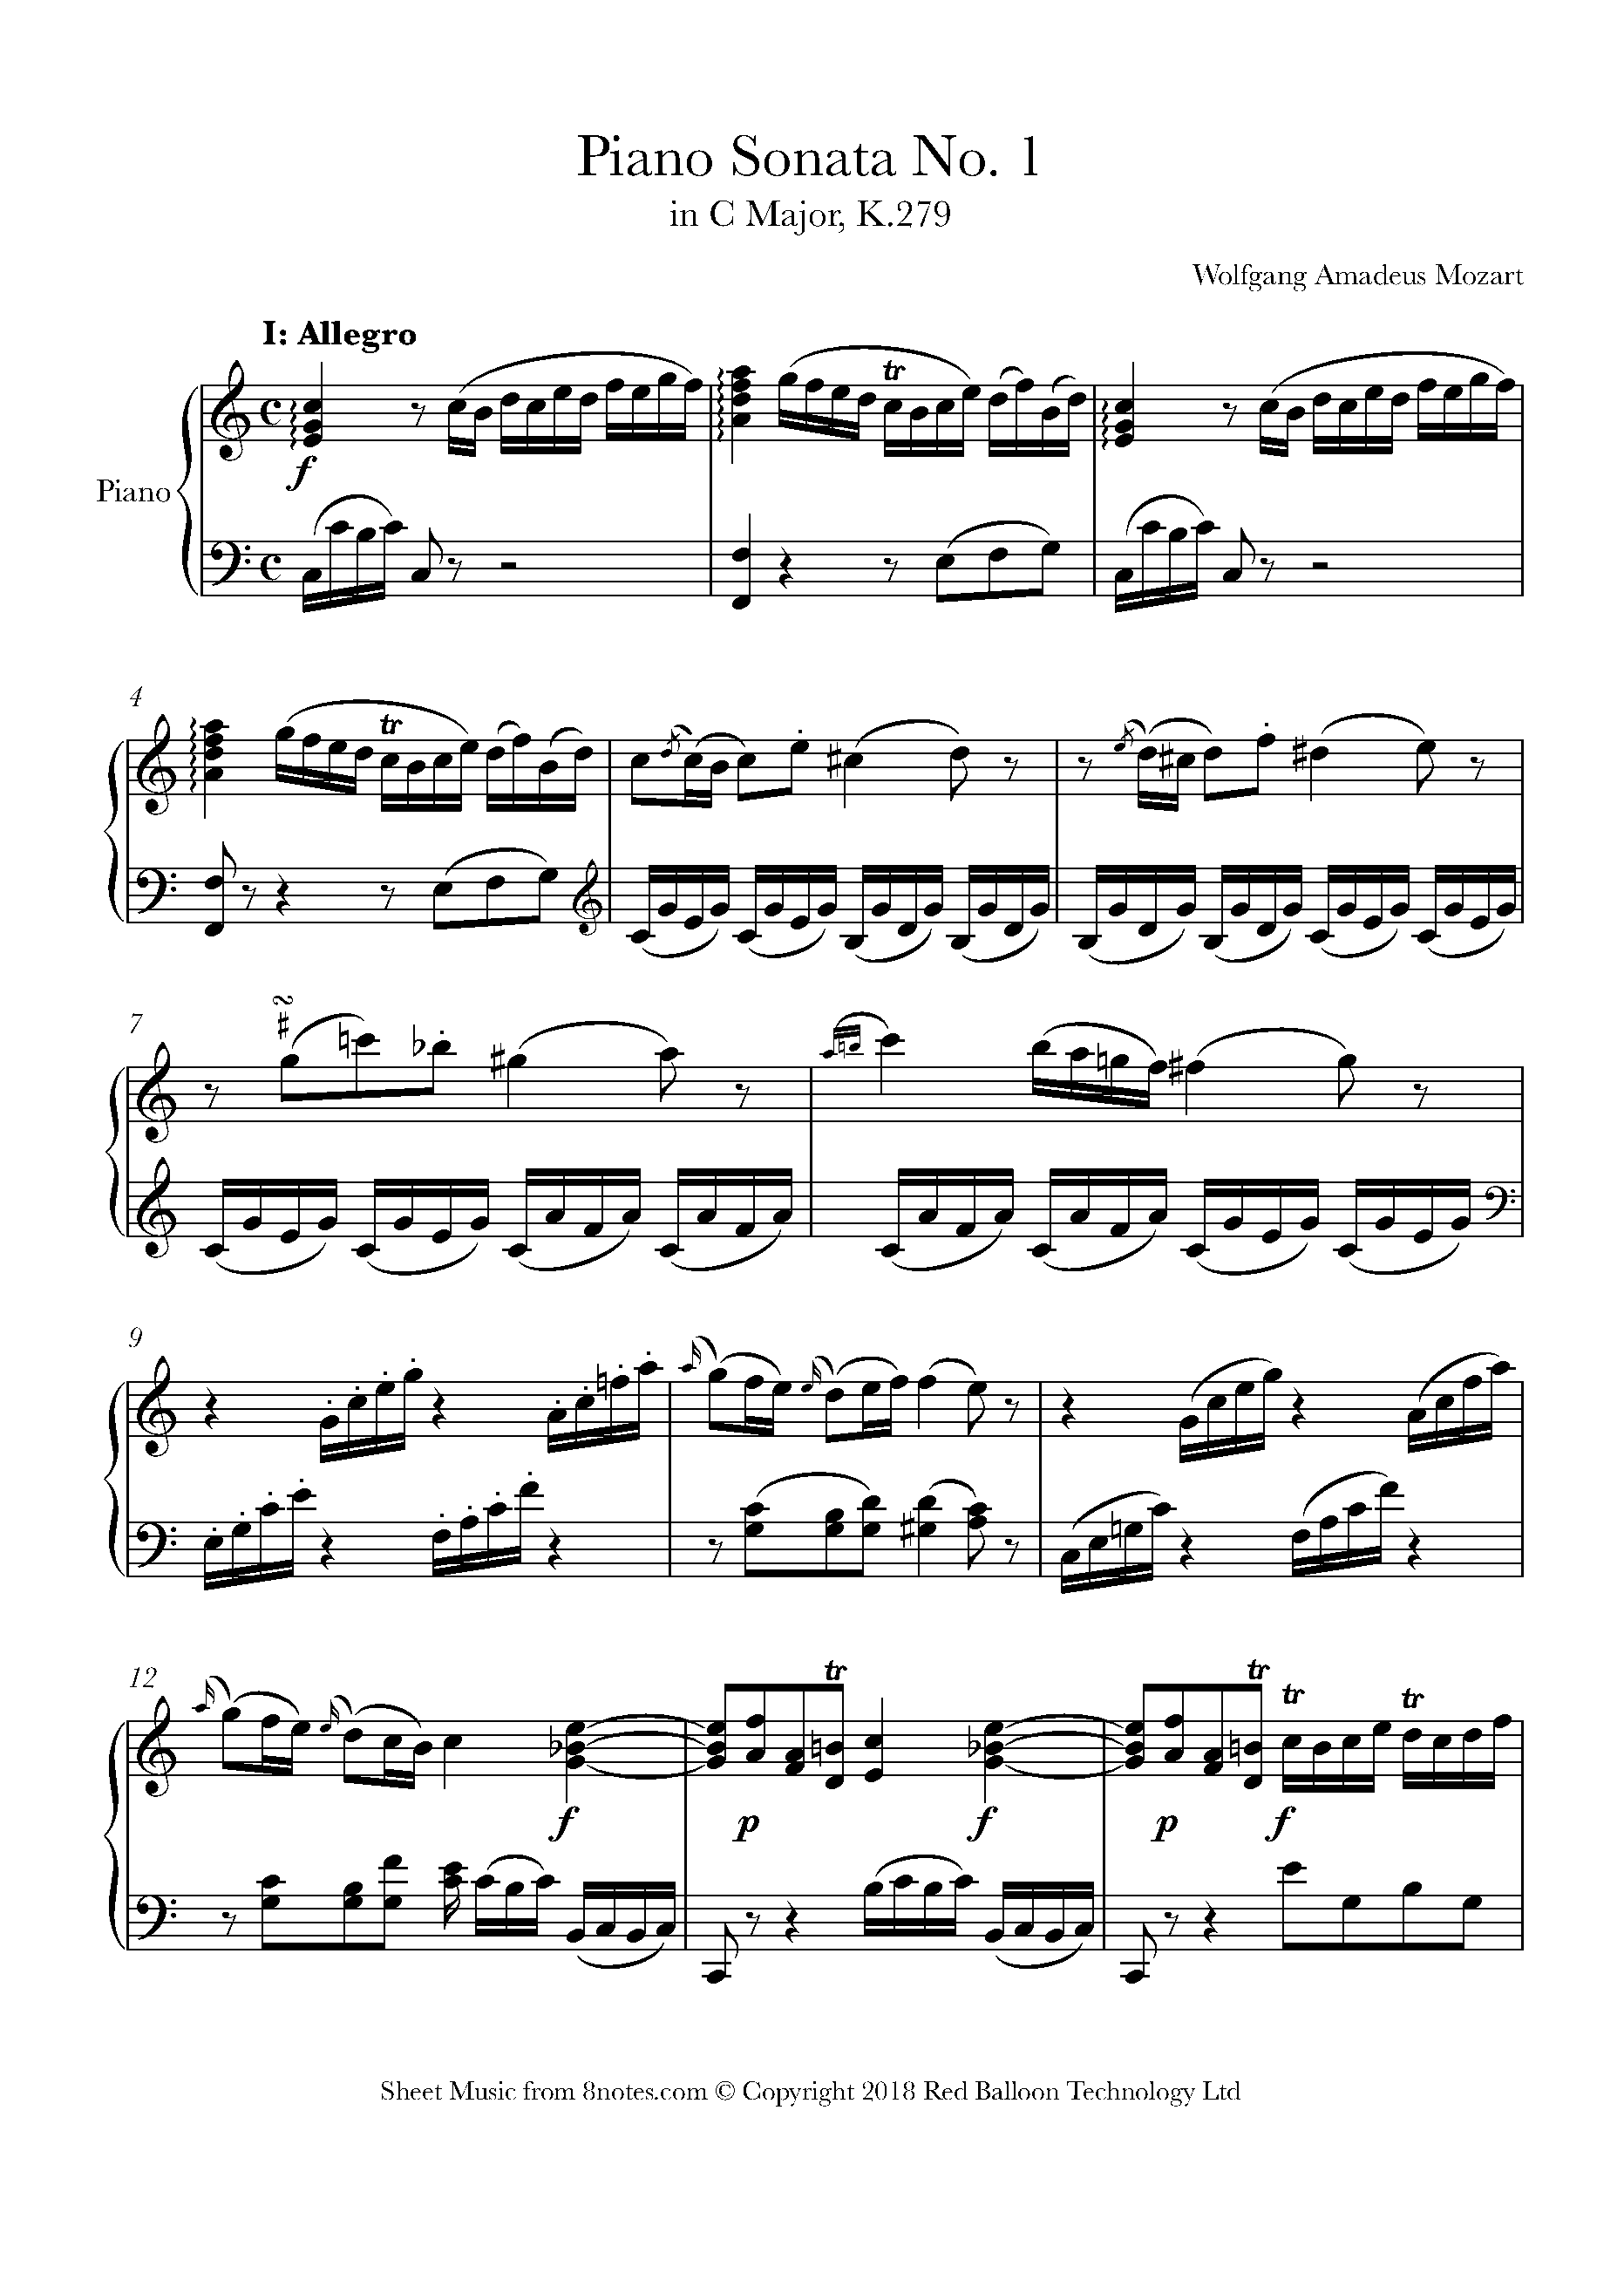 Mozart - Piano Sonata No. 1 in C Major, K. 279 1st movement Sheet music